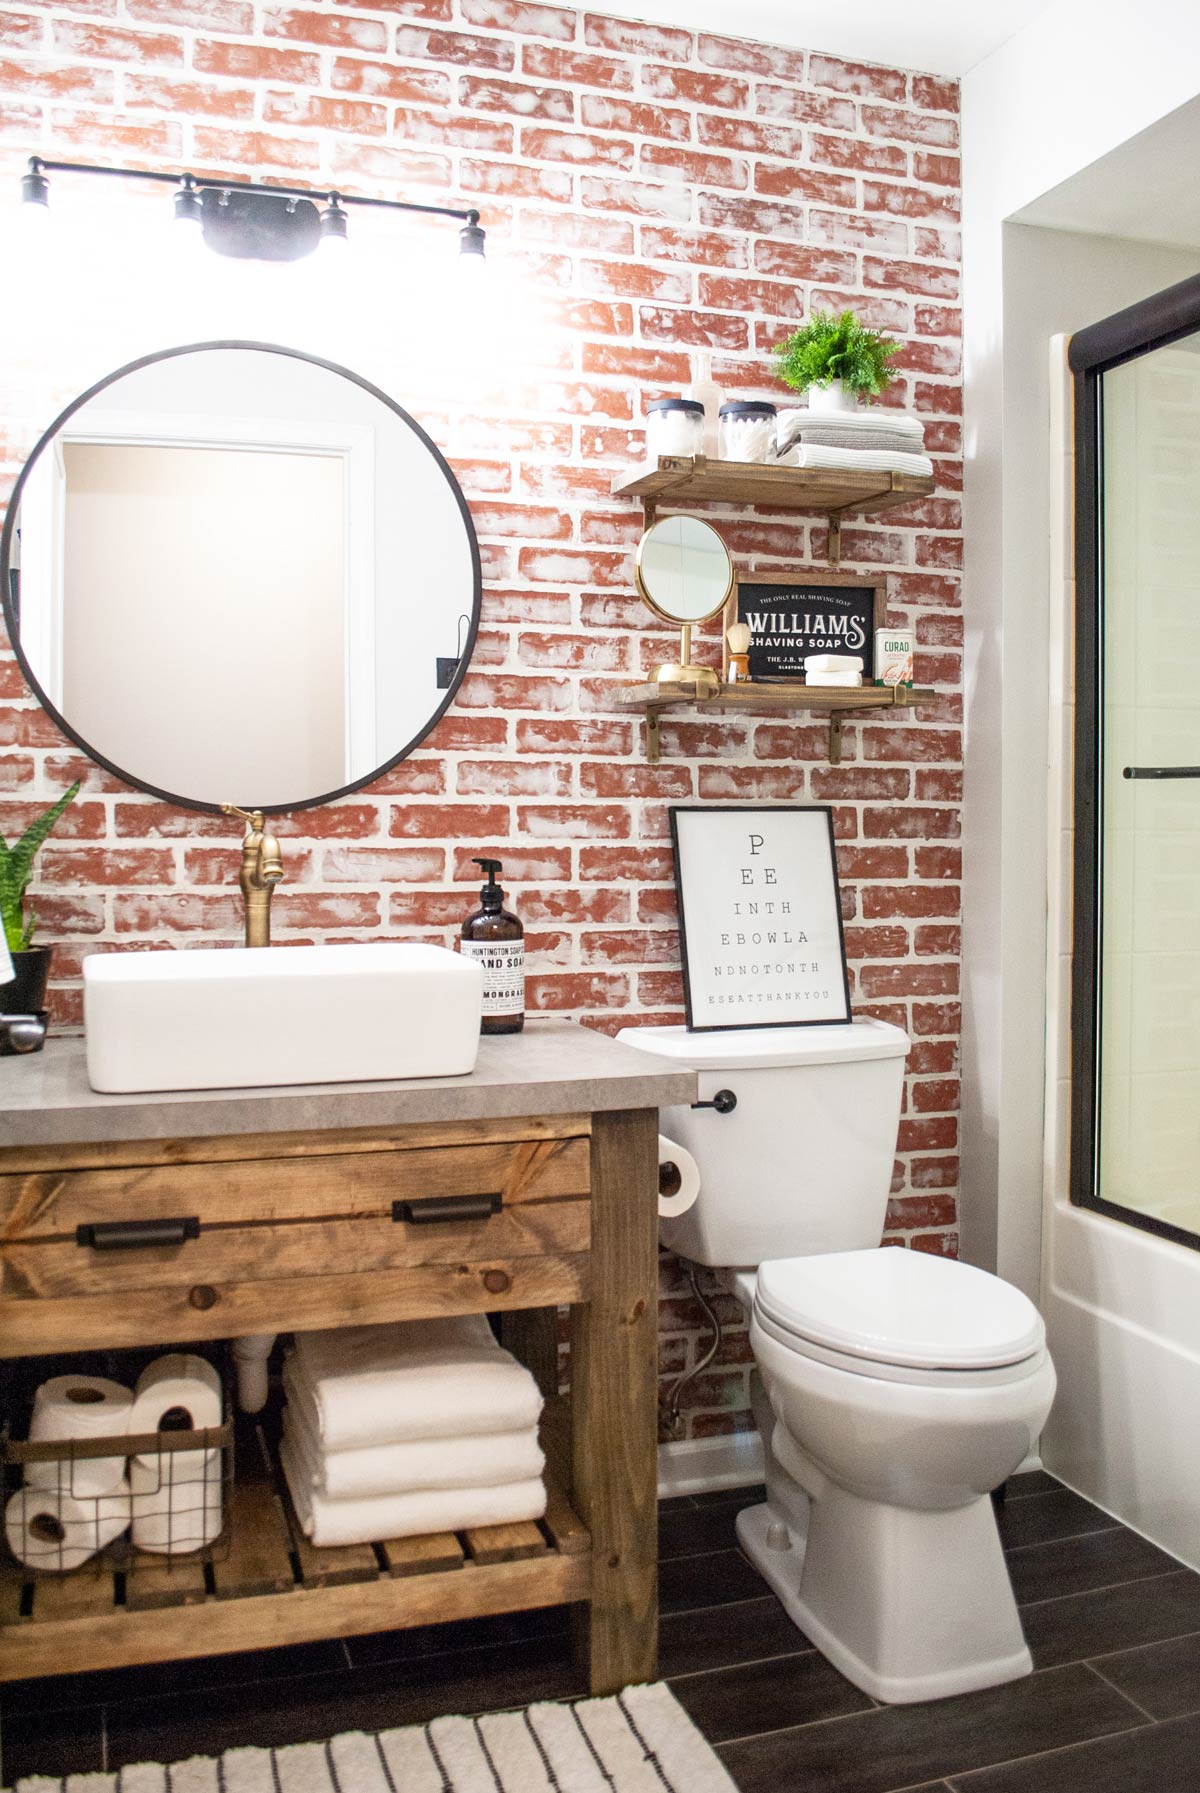 10 Pretty DIY Small Bathroom Makeovers & Budget Ideas • OhMeOhMy Blog